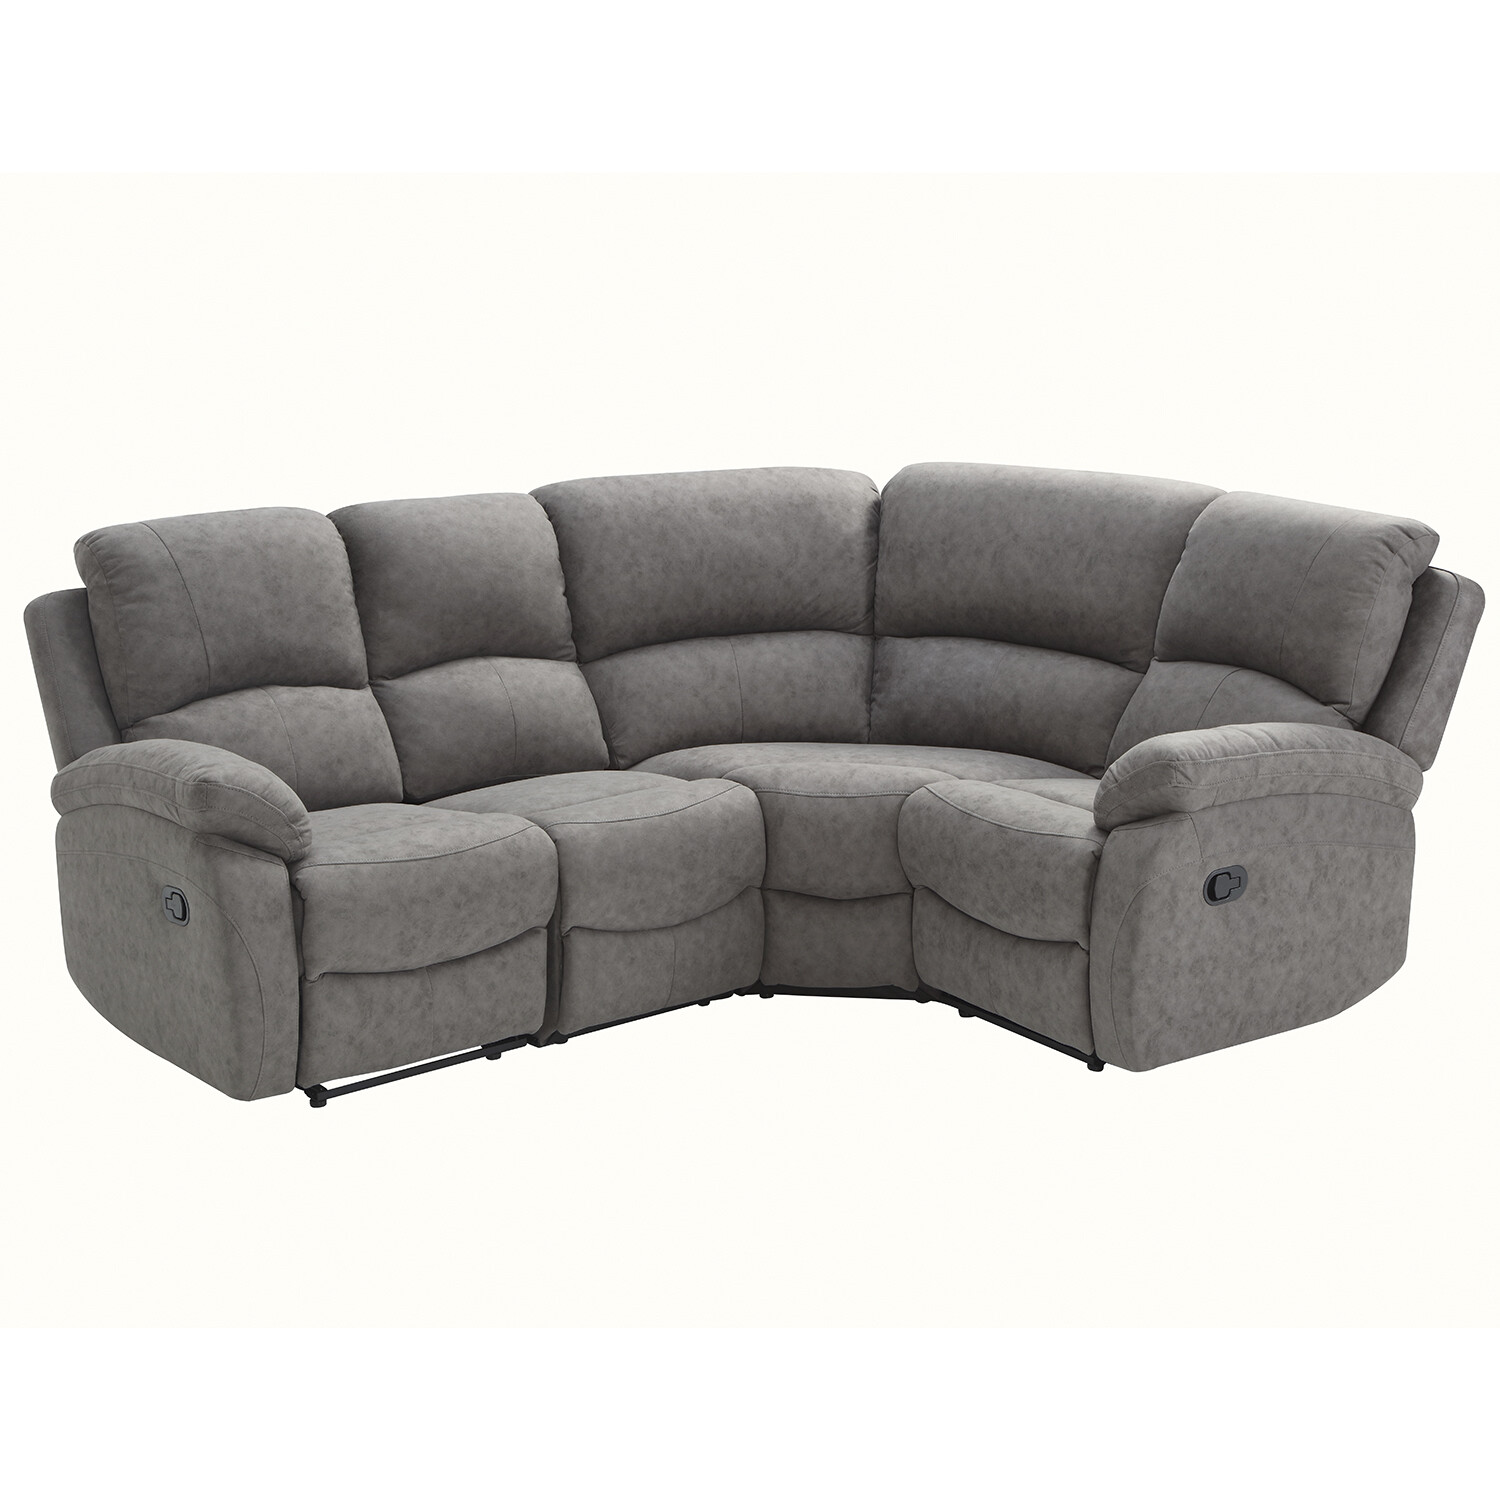 Milano 4 Seater Grey Fabric Reversible Corner Sofa Image 2